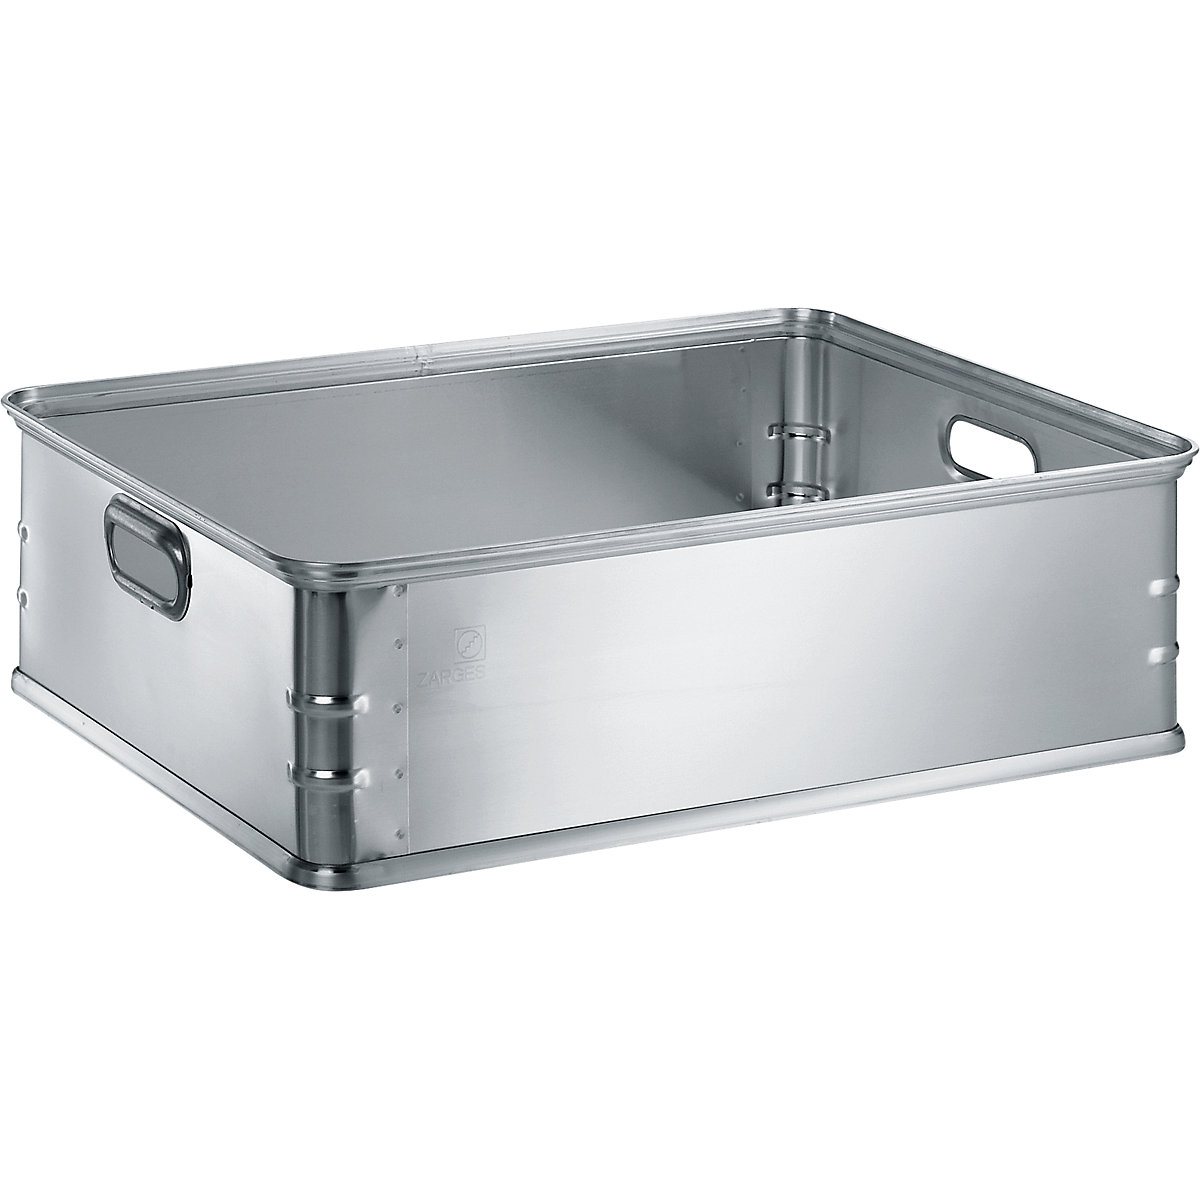 Transportna kutija i kutija za slaganje od aluminija - ZARGES